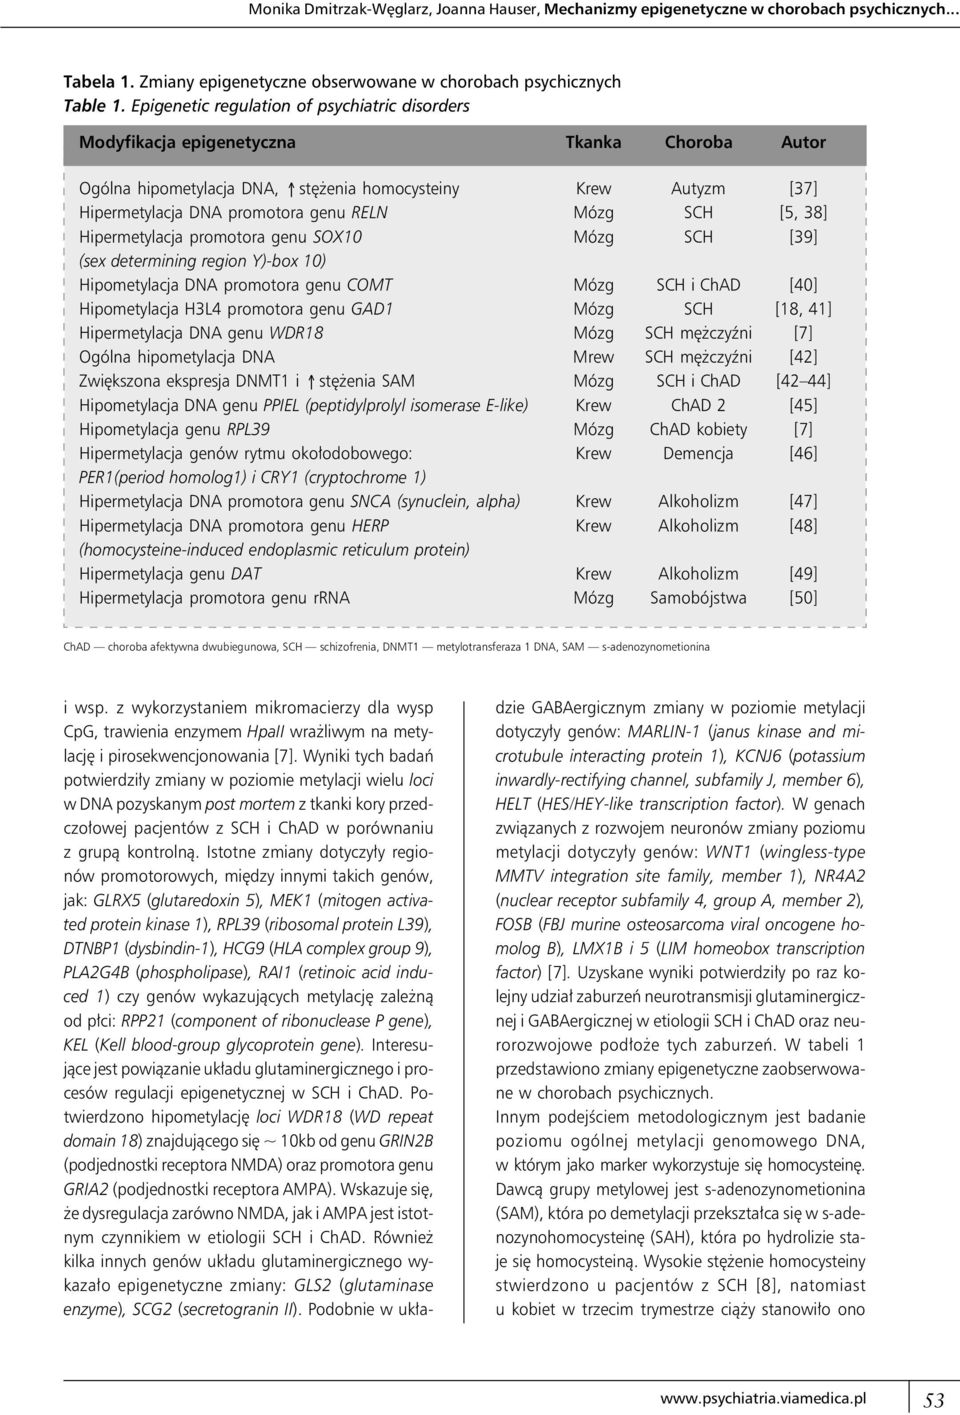 Mózg SCH [5, 38] Hipermetylacja promotora genu SOX10 Mózg SCH [39] (sex determining region Y)-box 10) Hipometylacja DNA promotora genu COMT Mózg SCH i ChAD [40] Hipometylacja H3L4 promotora genu GAD1